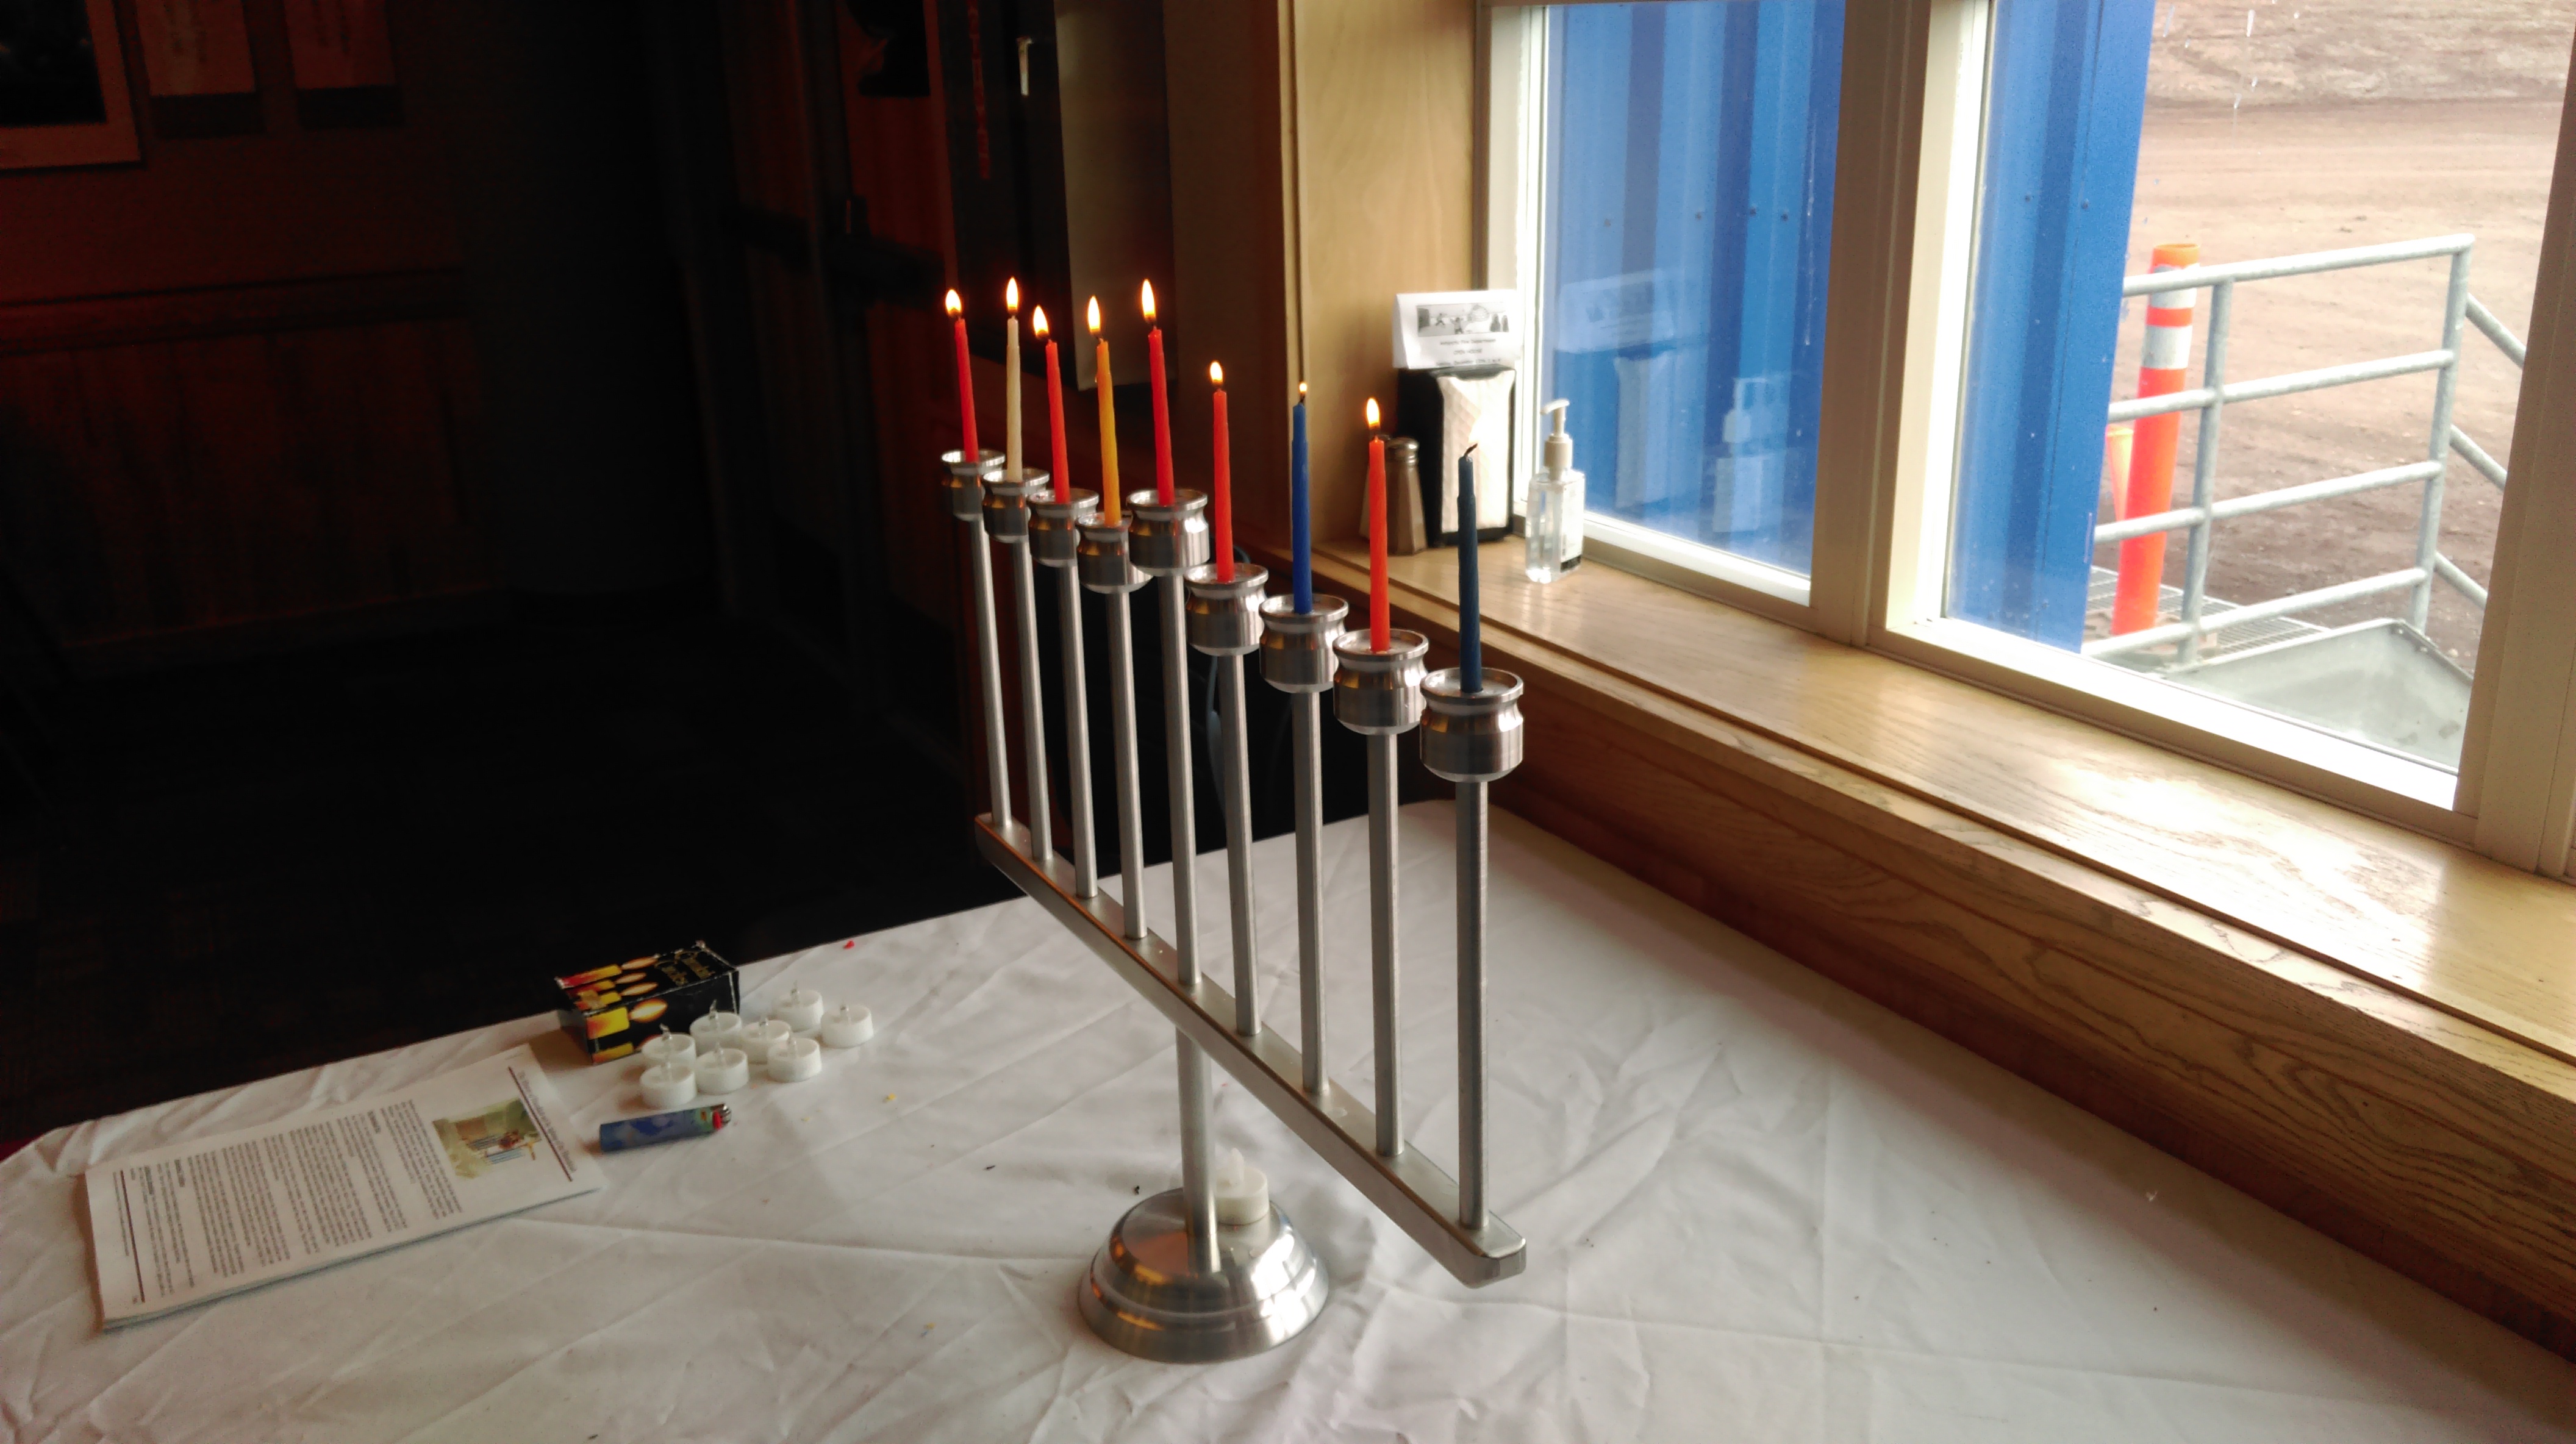 The lit Hanukkah Menorah on the Last Night of Hanukkah